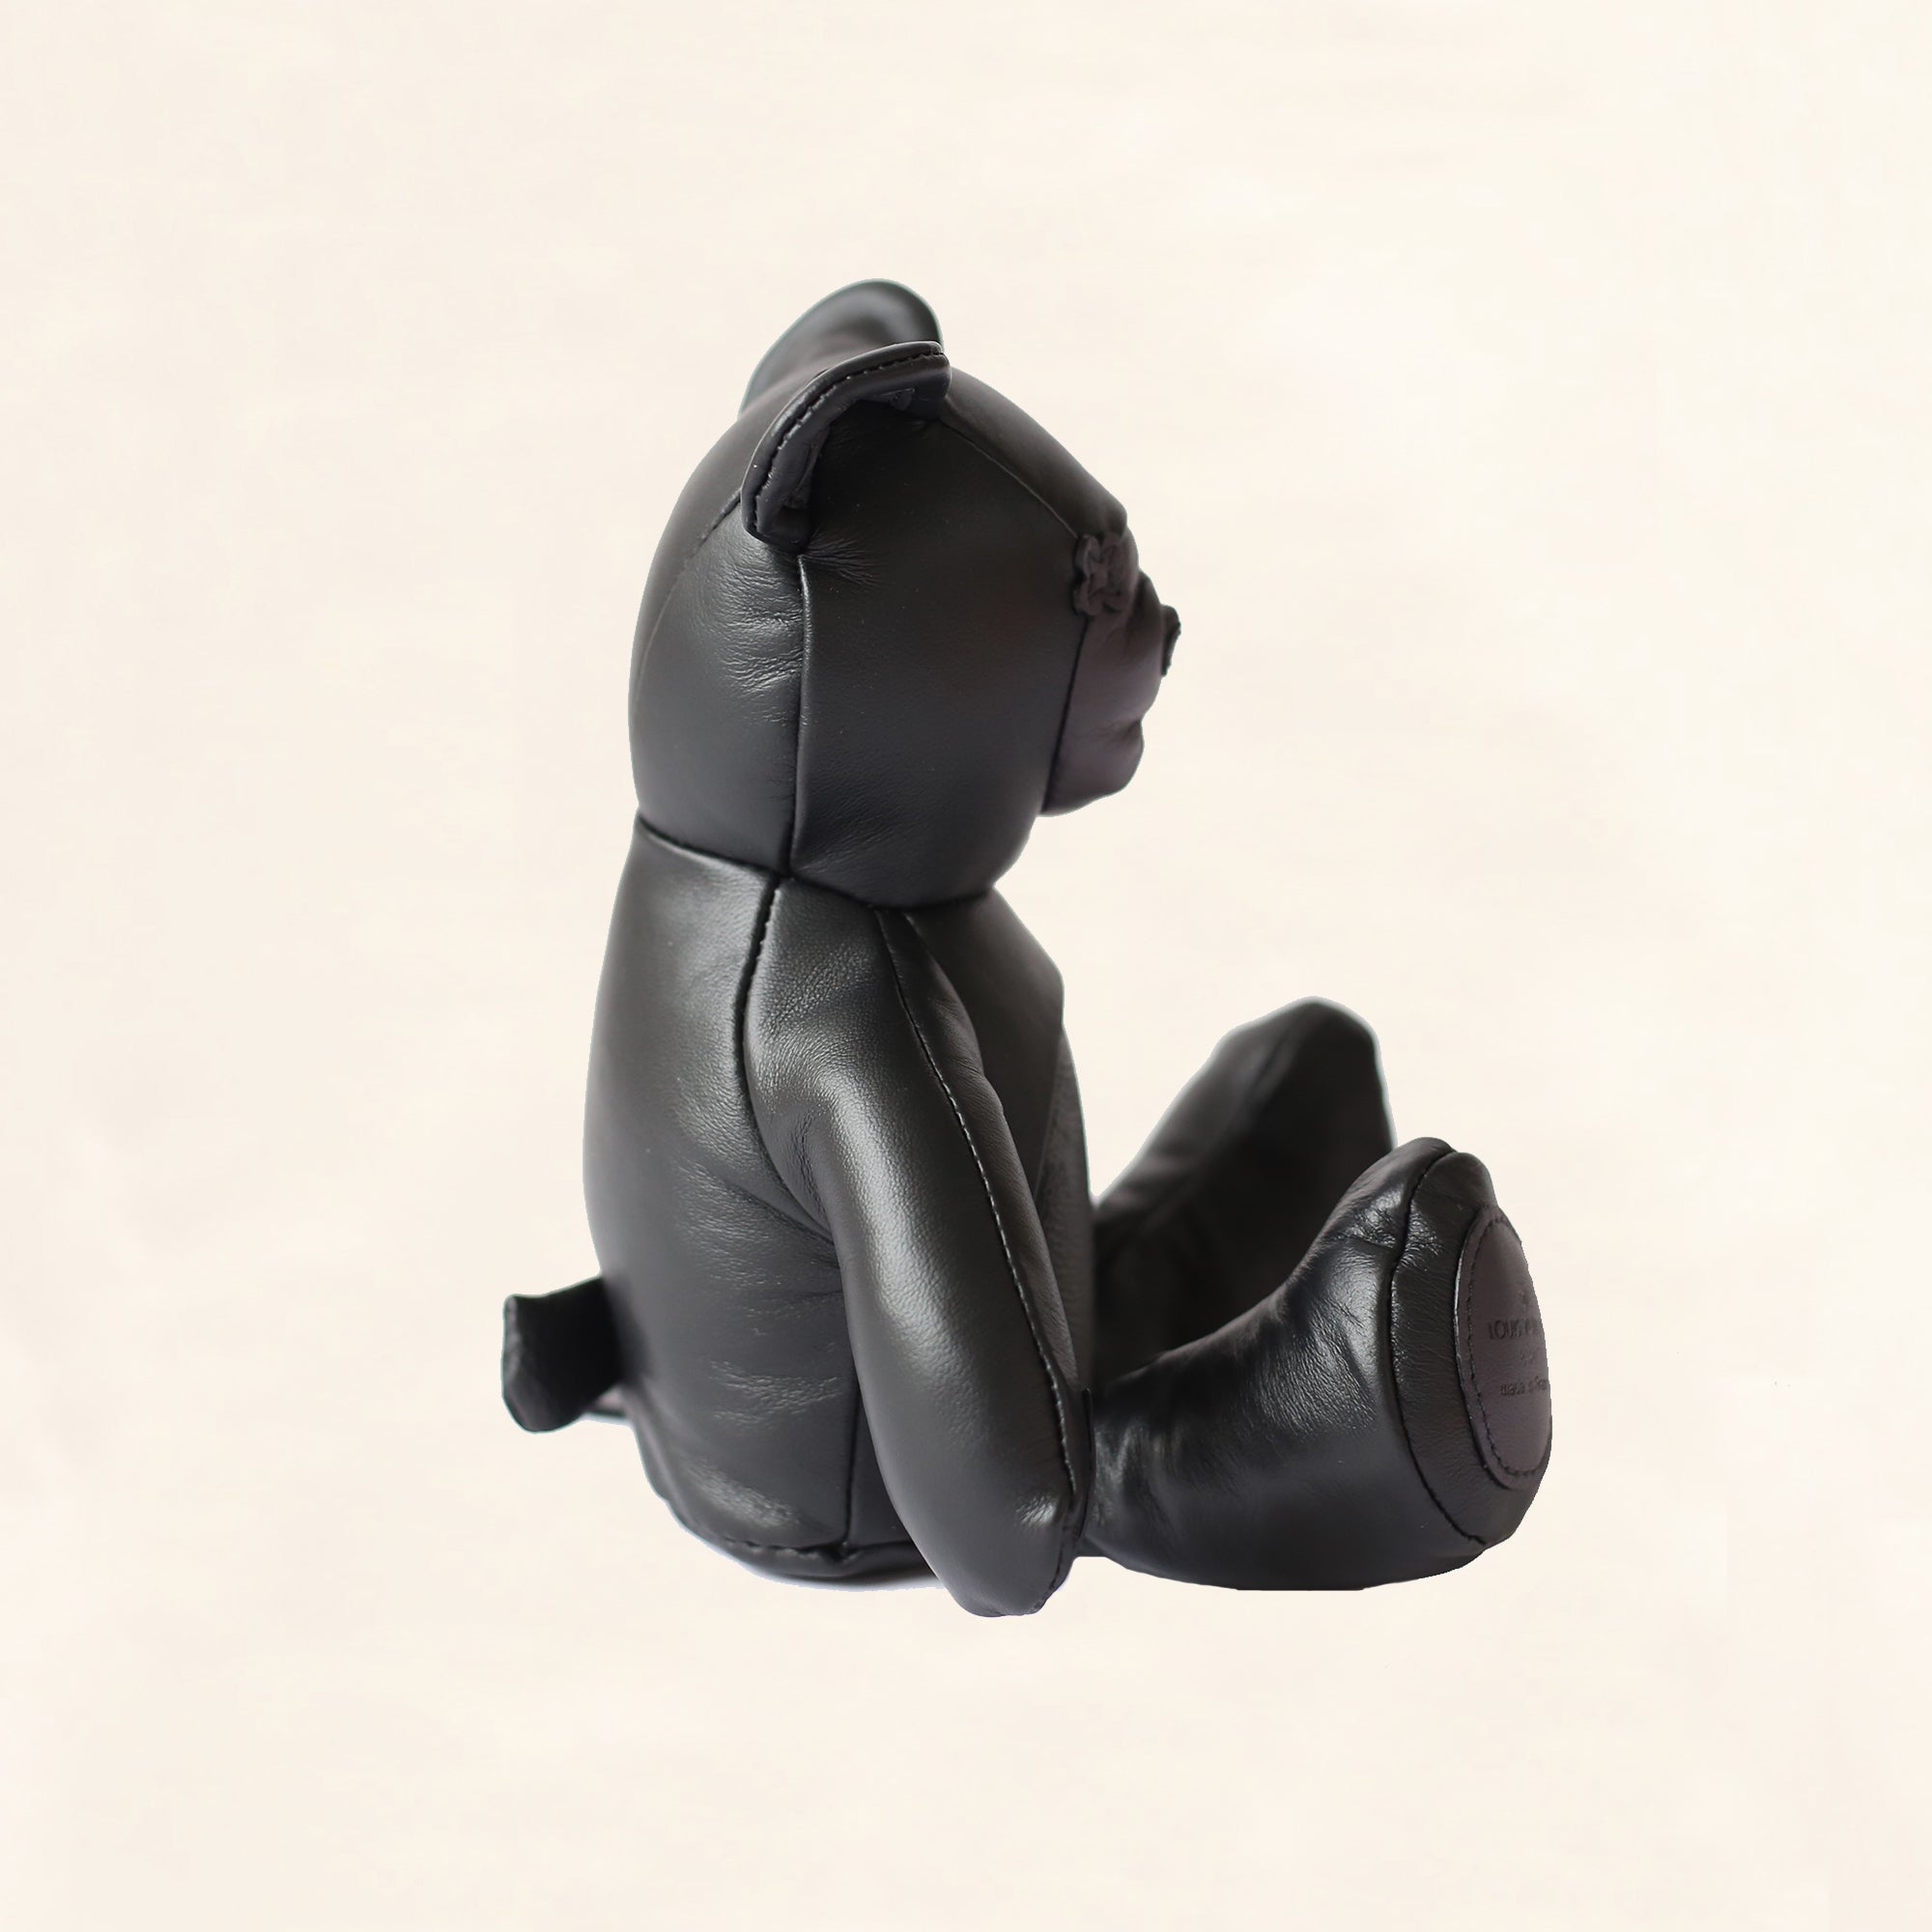 Splurge: This limited edition Louis Vuitton teddy bear will set